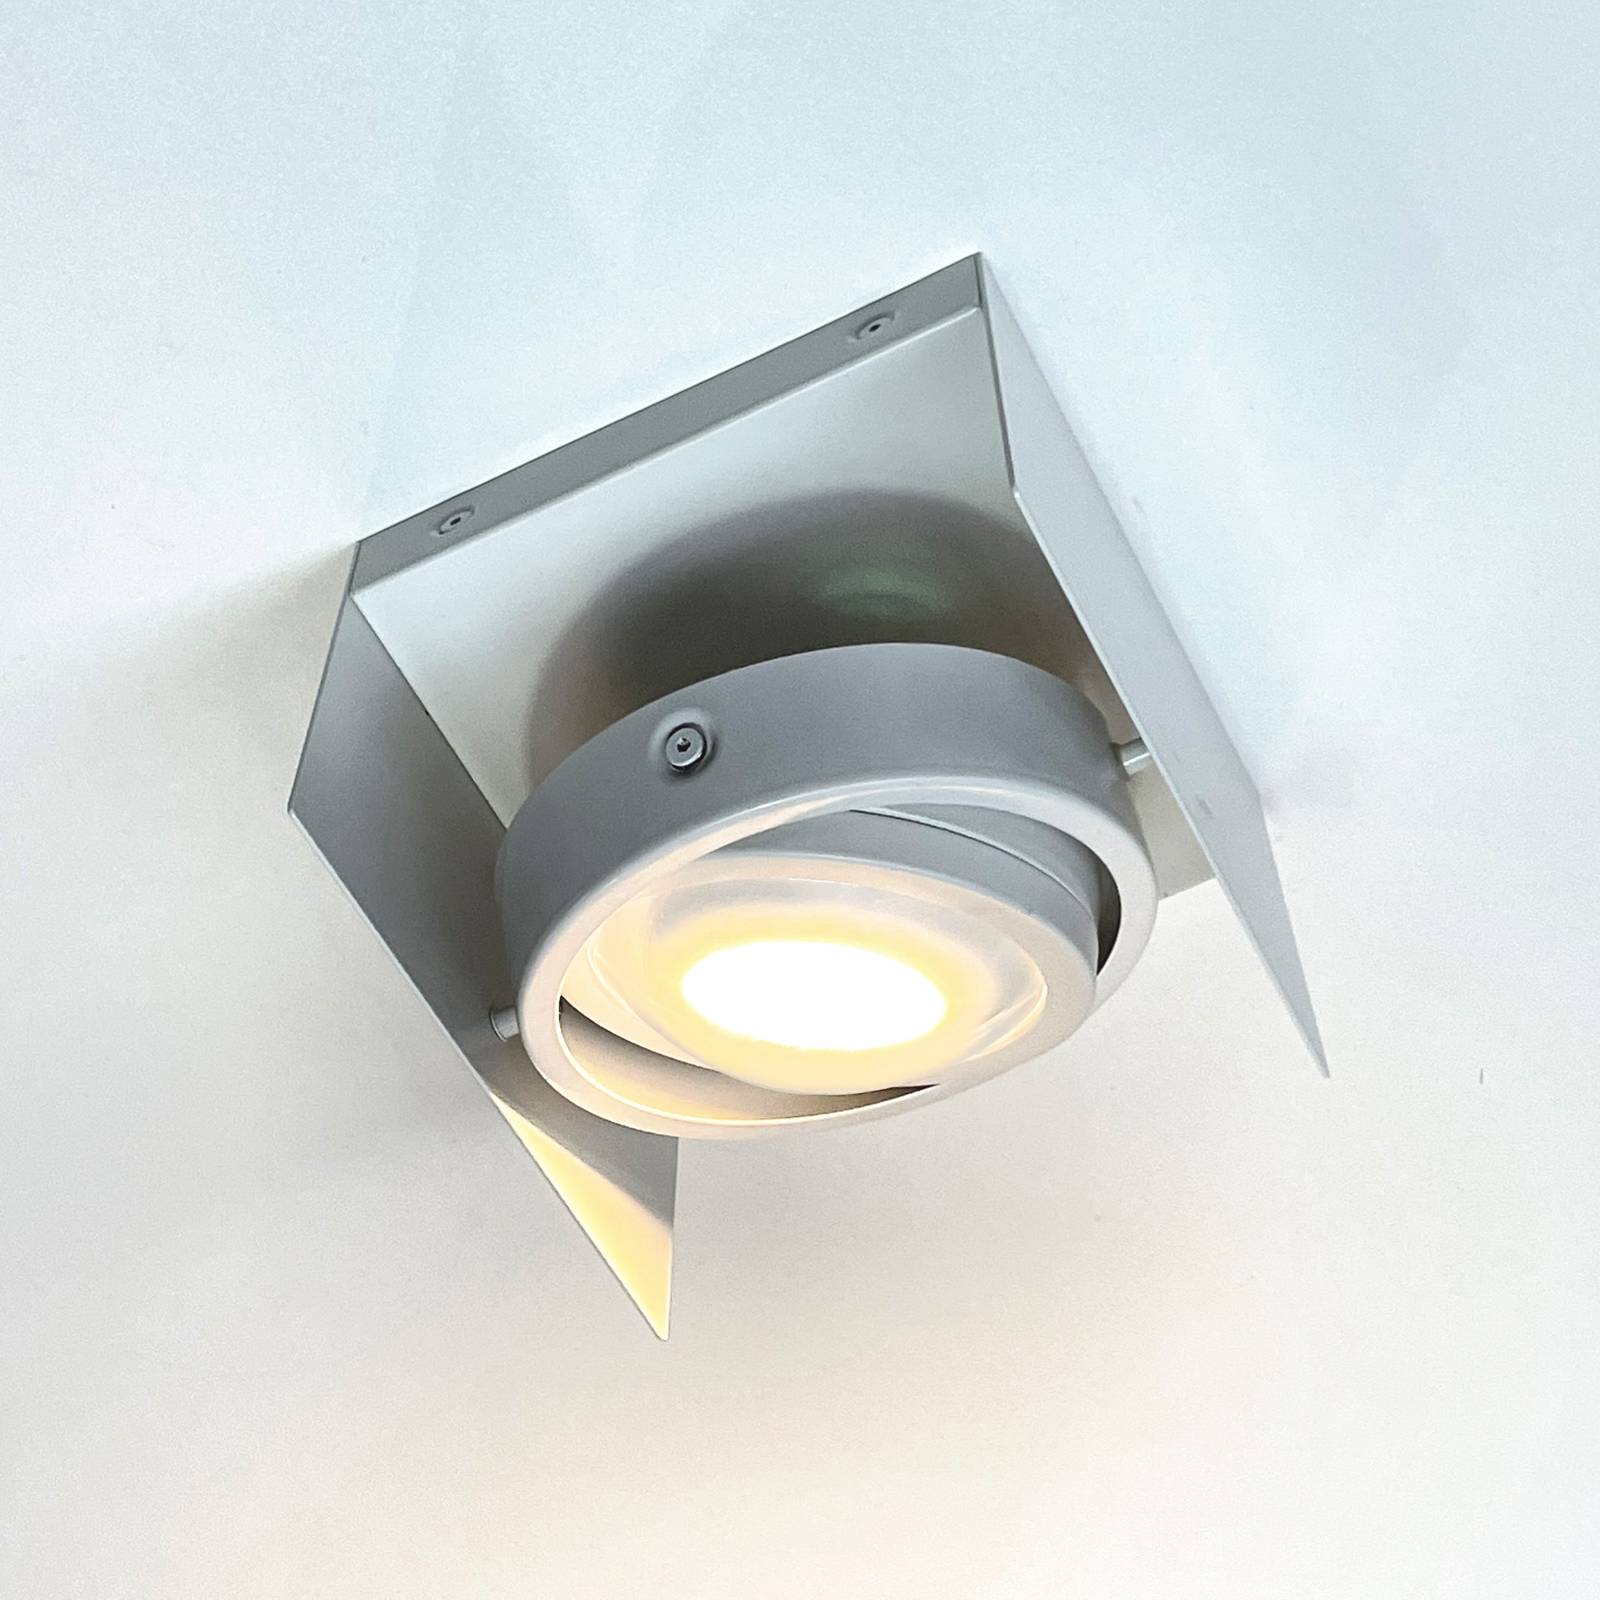 MEGATRON Cardano spot plafond LED à 1 lampe blanc